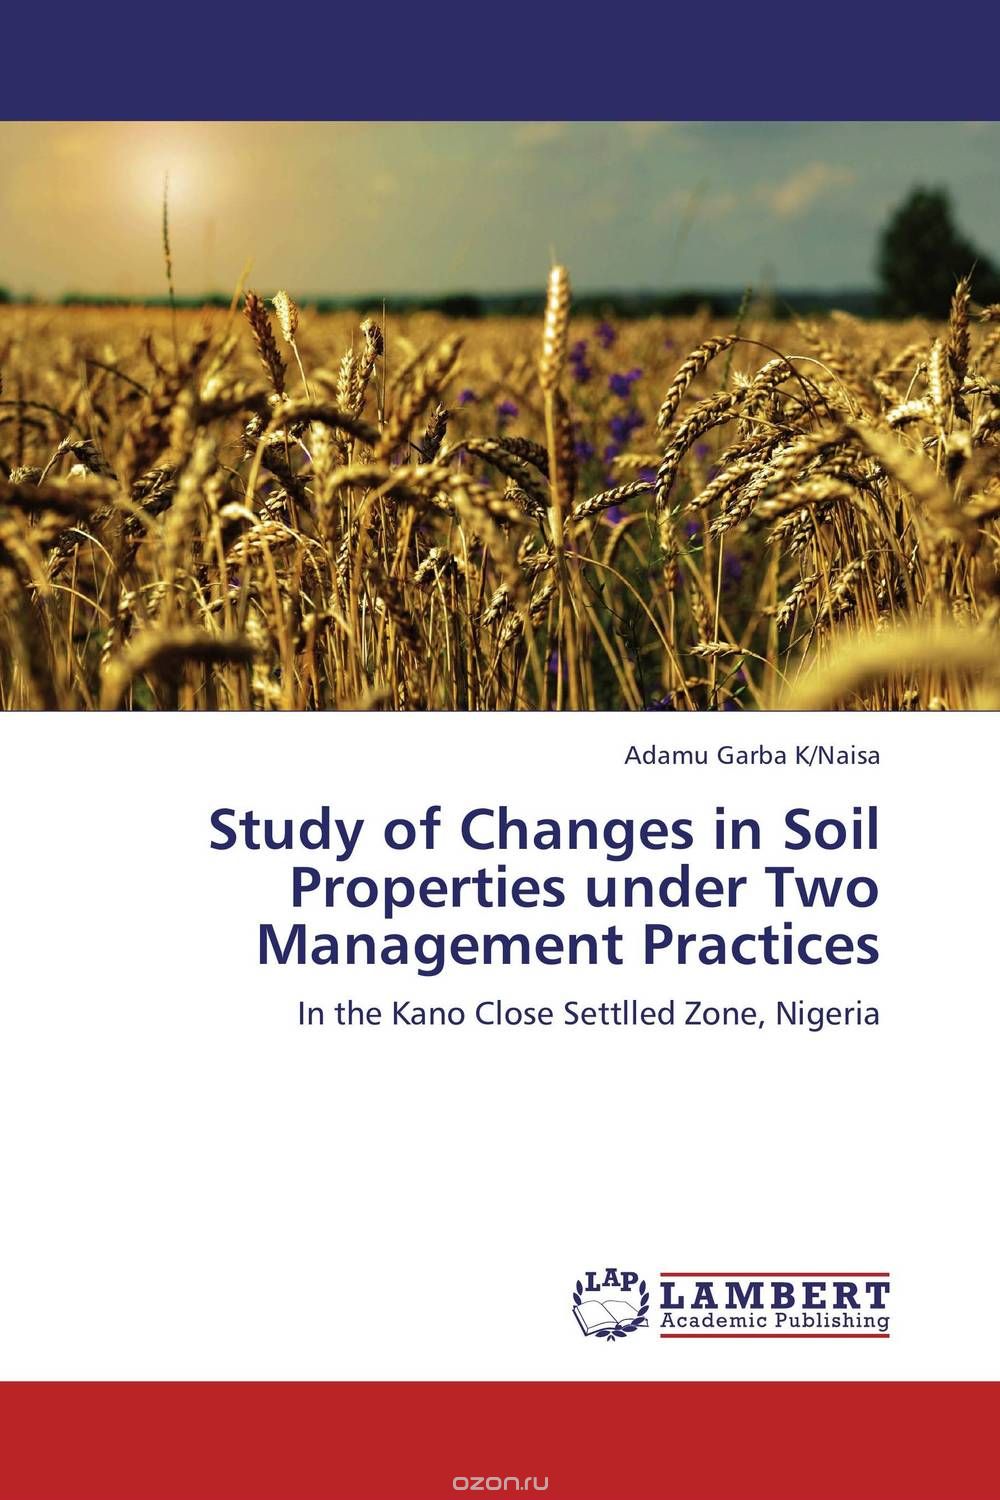 Скачать книгу "Study of Changes in Soil Properties under Two Management Practices"